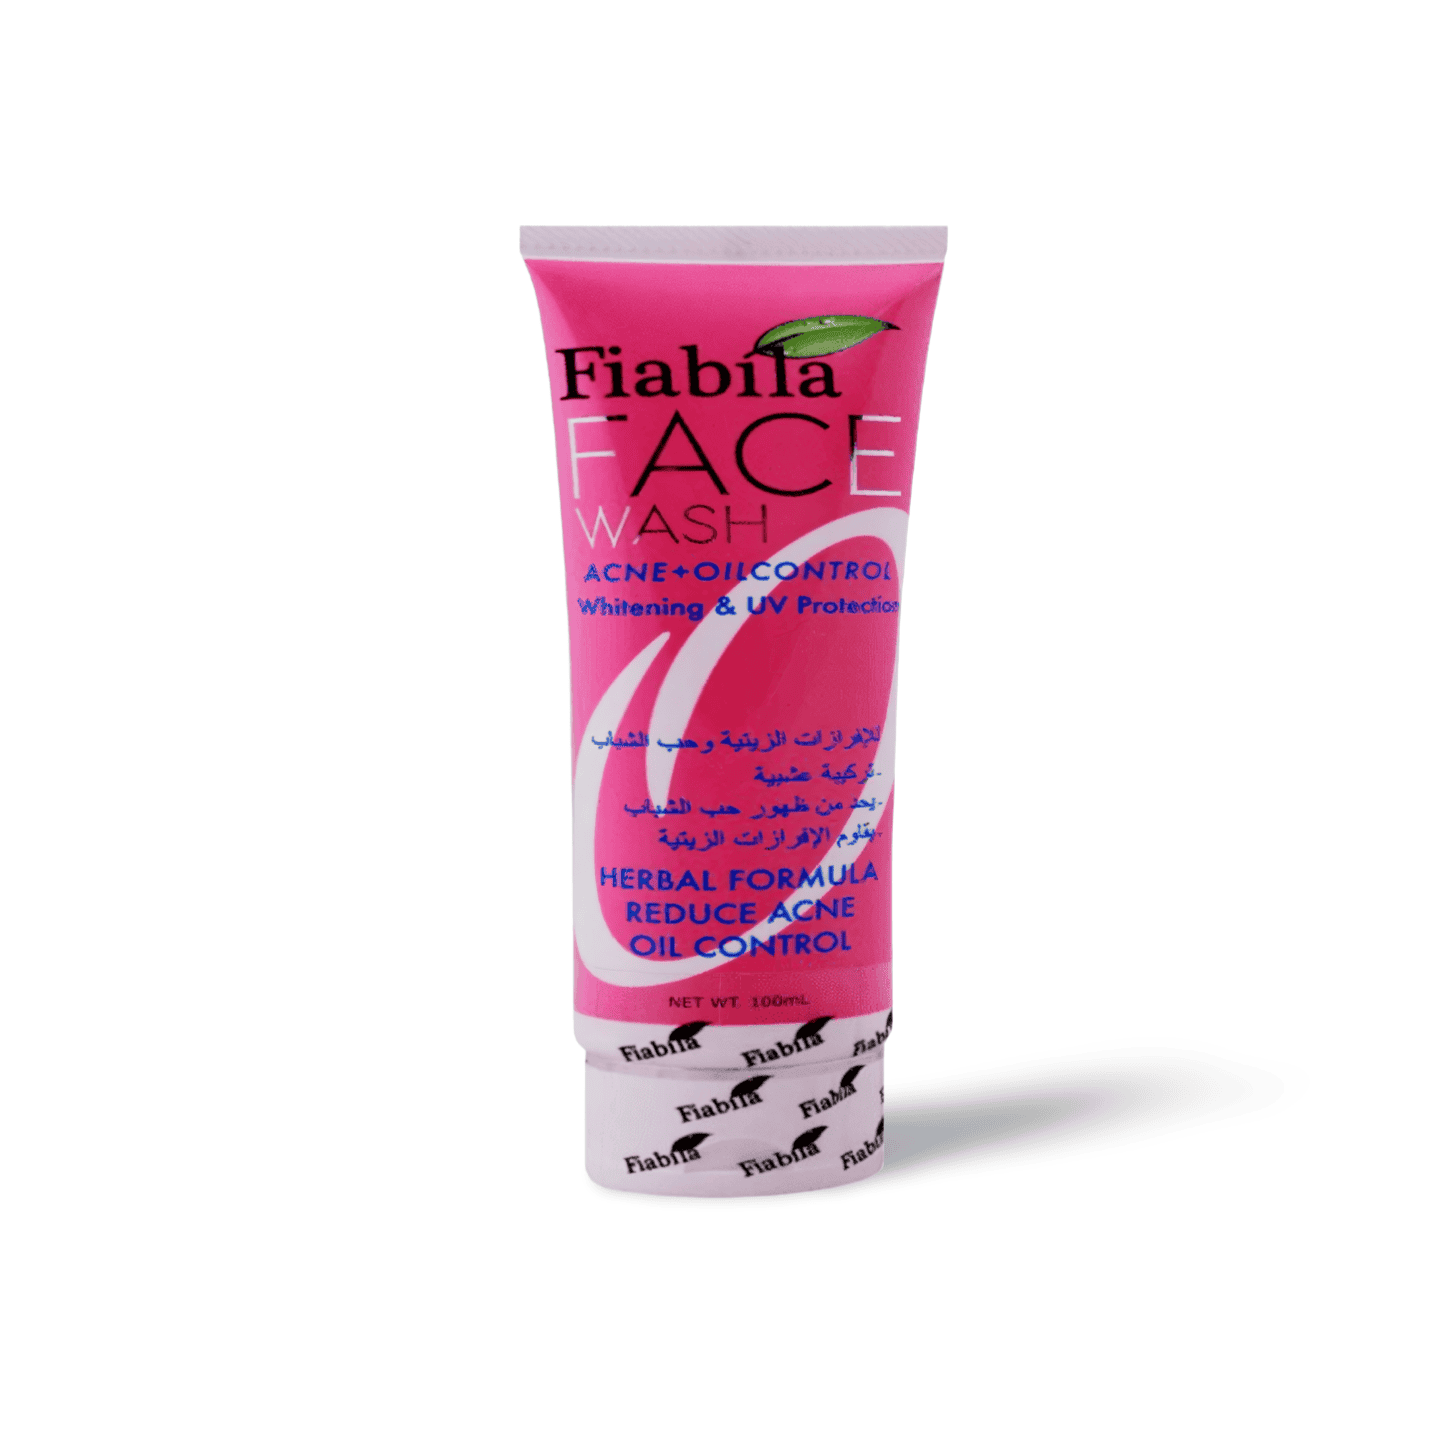 Fiabila Acne + Oil Control Face Wash